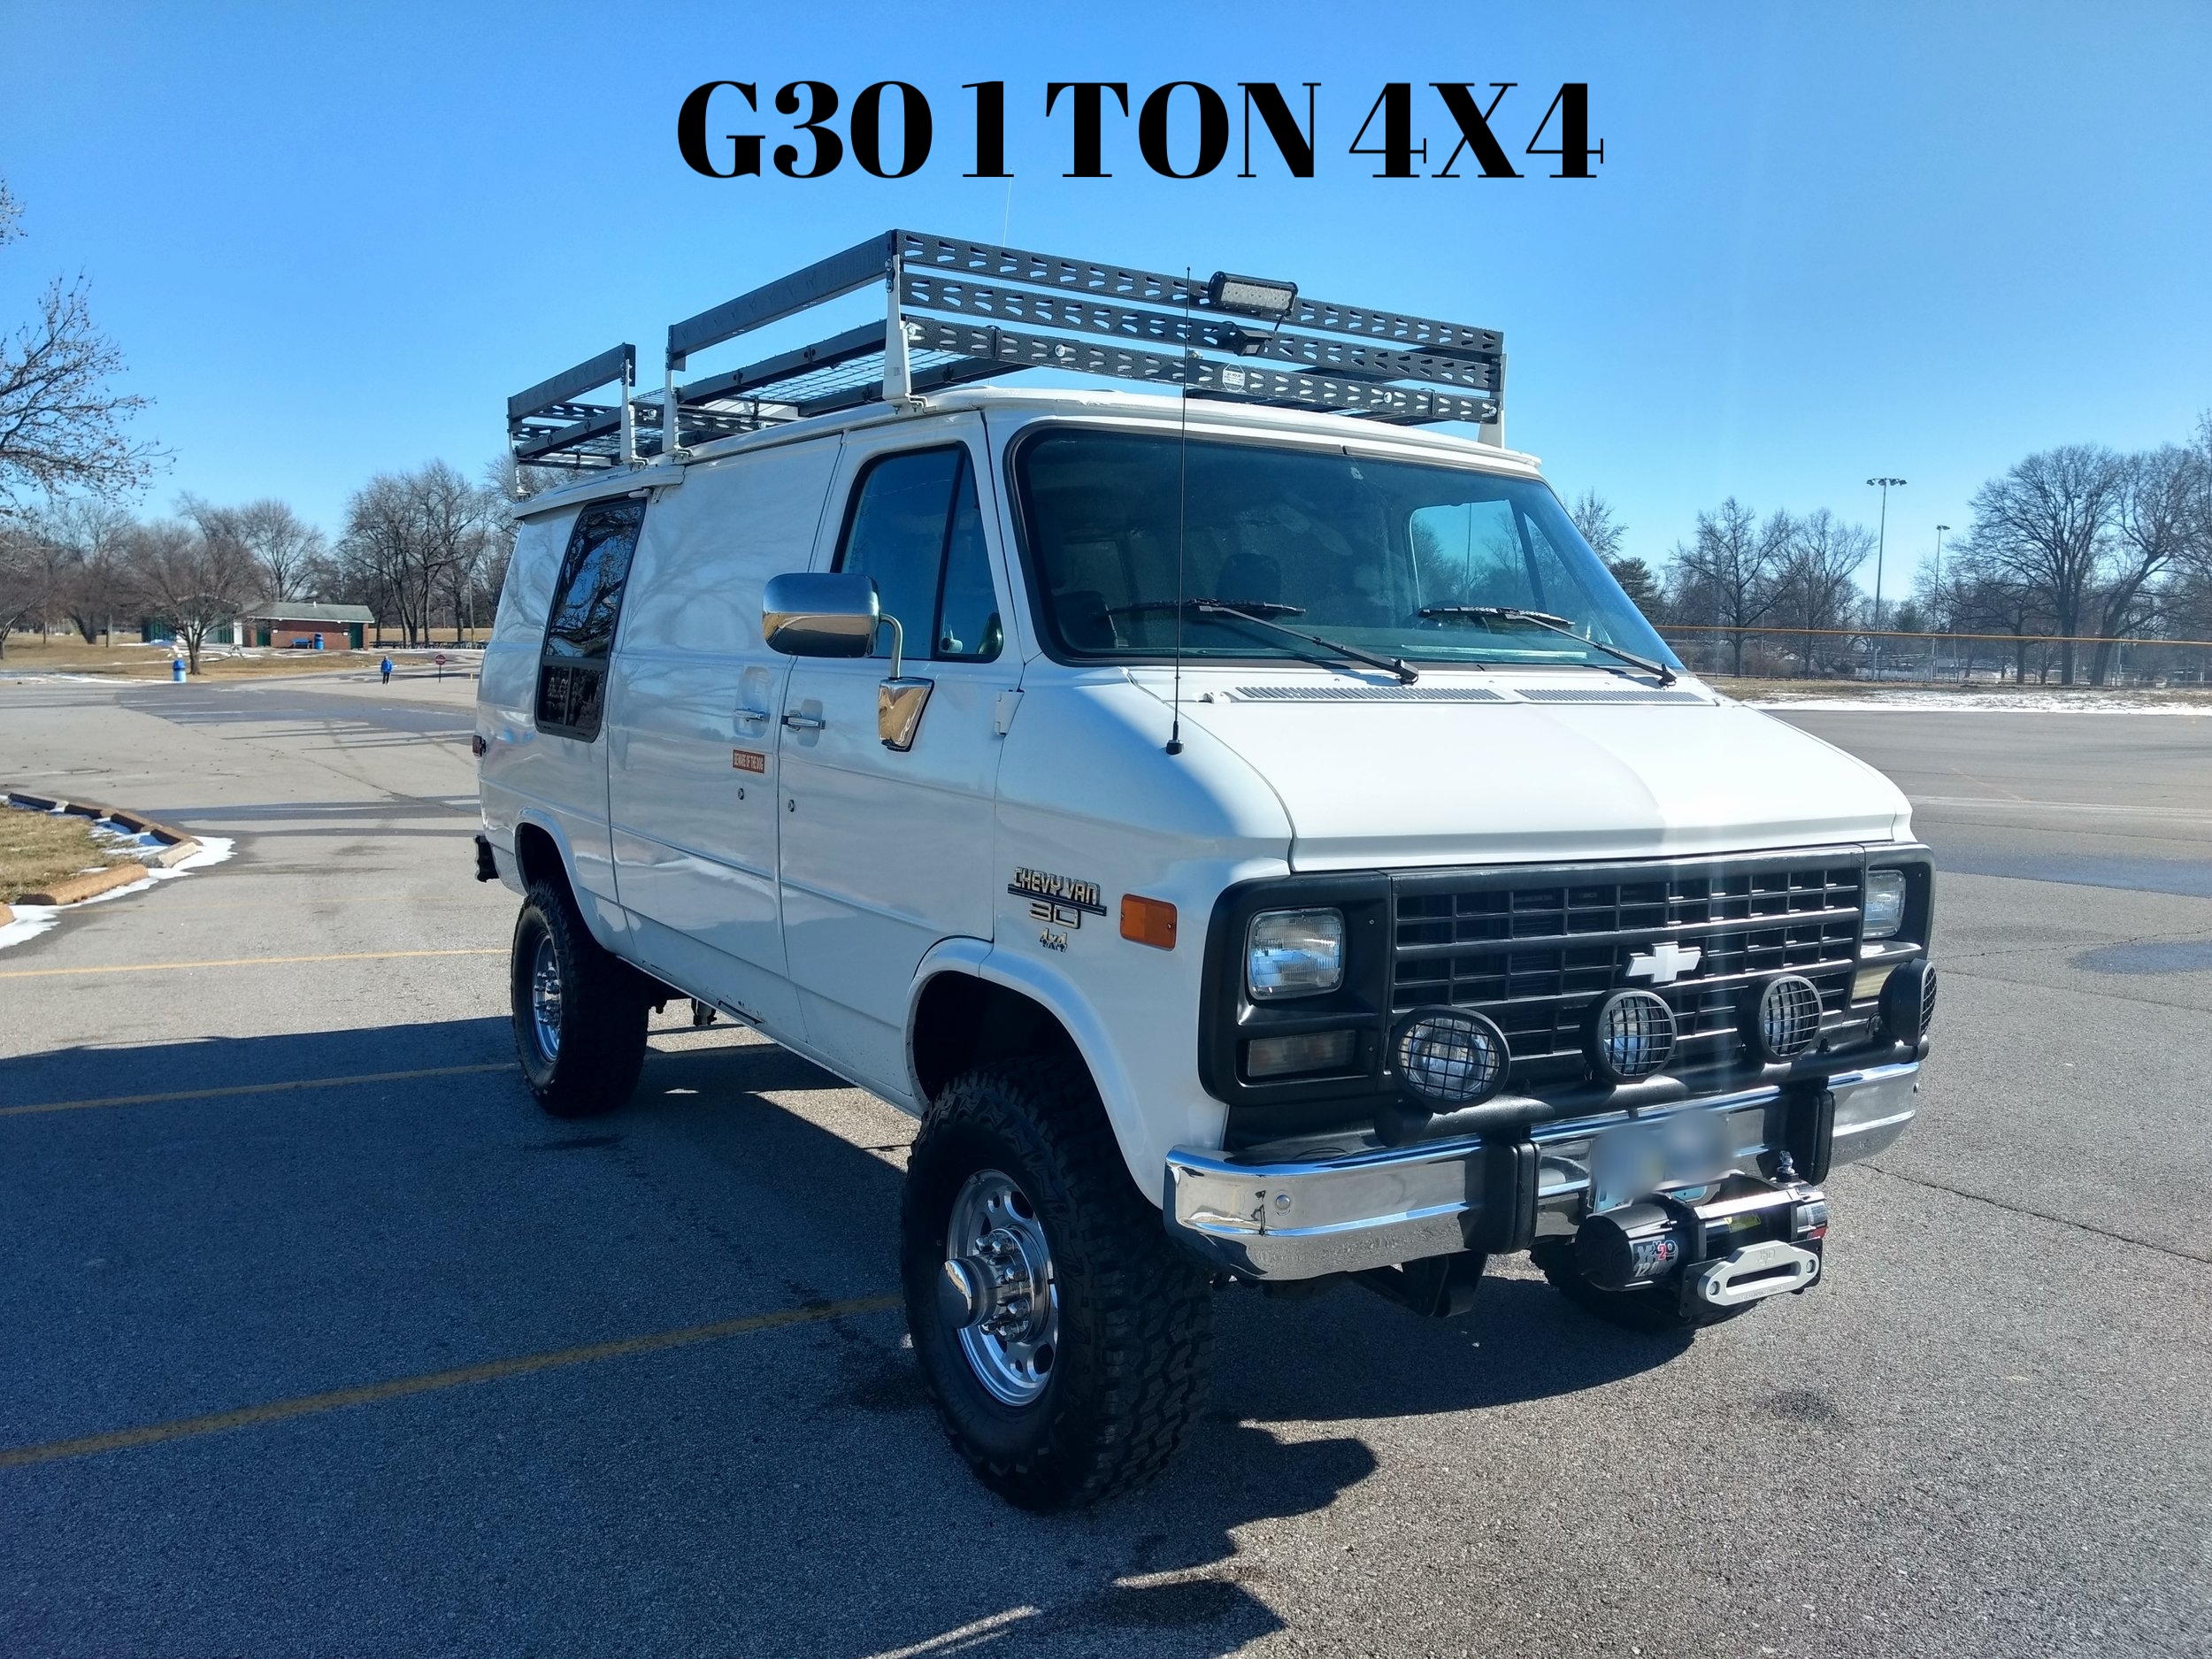 Chevy G30 1 Ton 4x4 Van — Boondocking